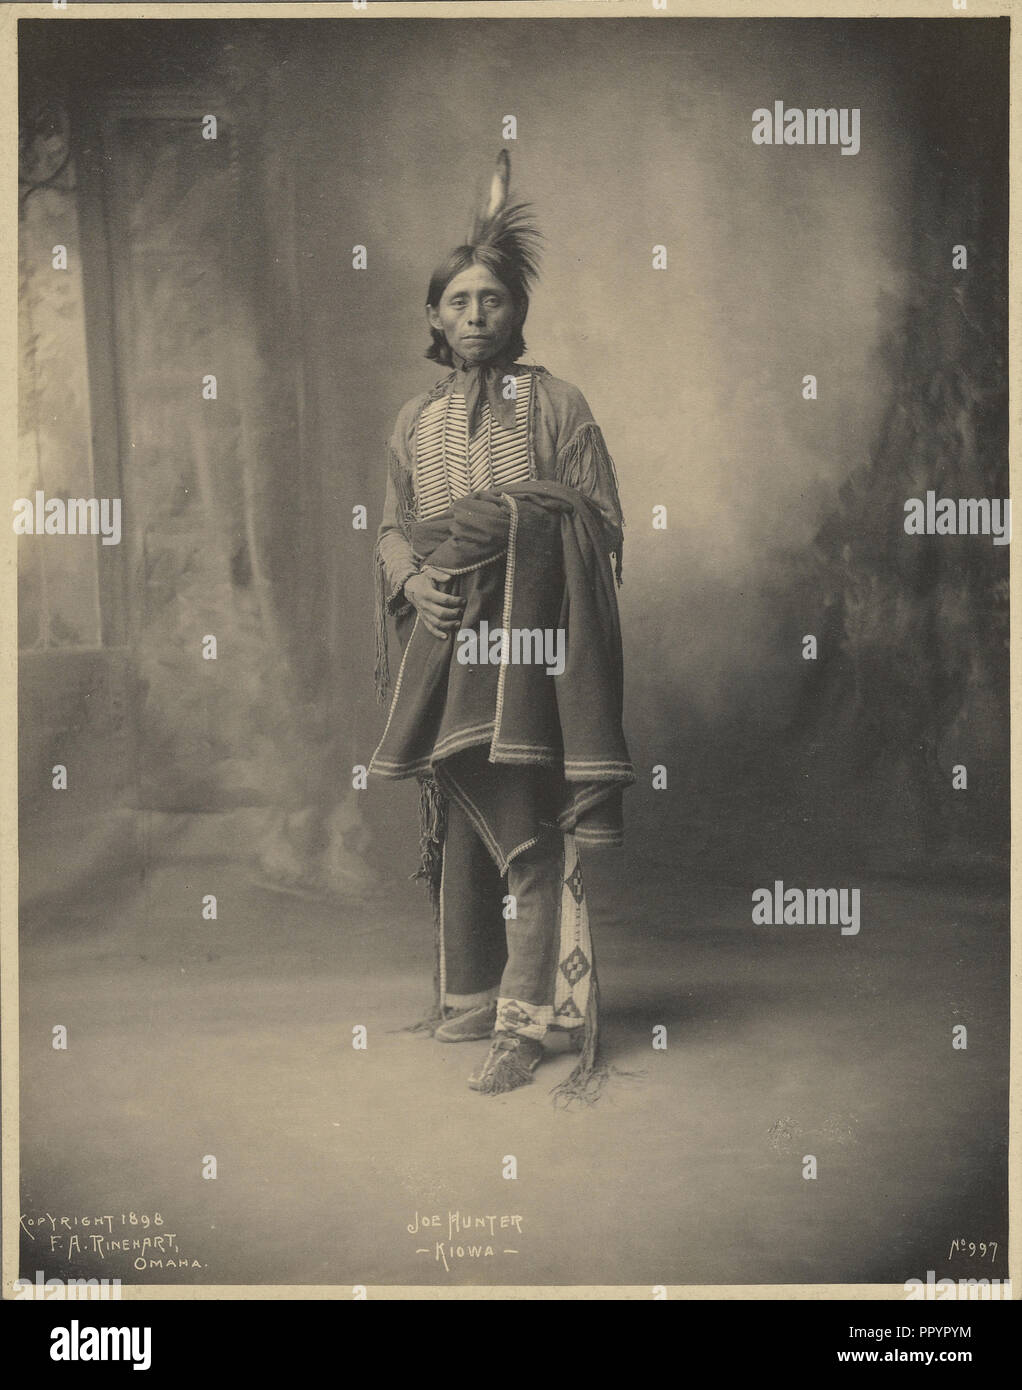 Joe Hunter, Kiowa; Adolph F. Muhr, American, died 1913, Frank A. Rinehart, American, 1861 - 1928, 1898; Platinum print Stock Photo